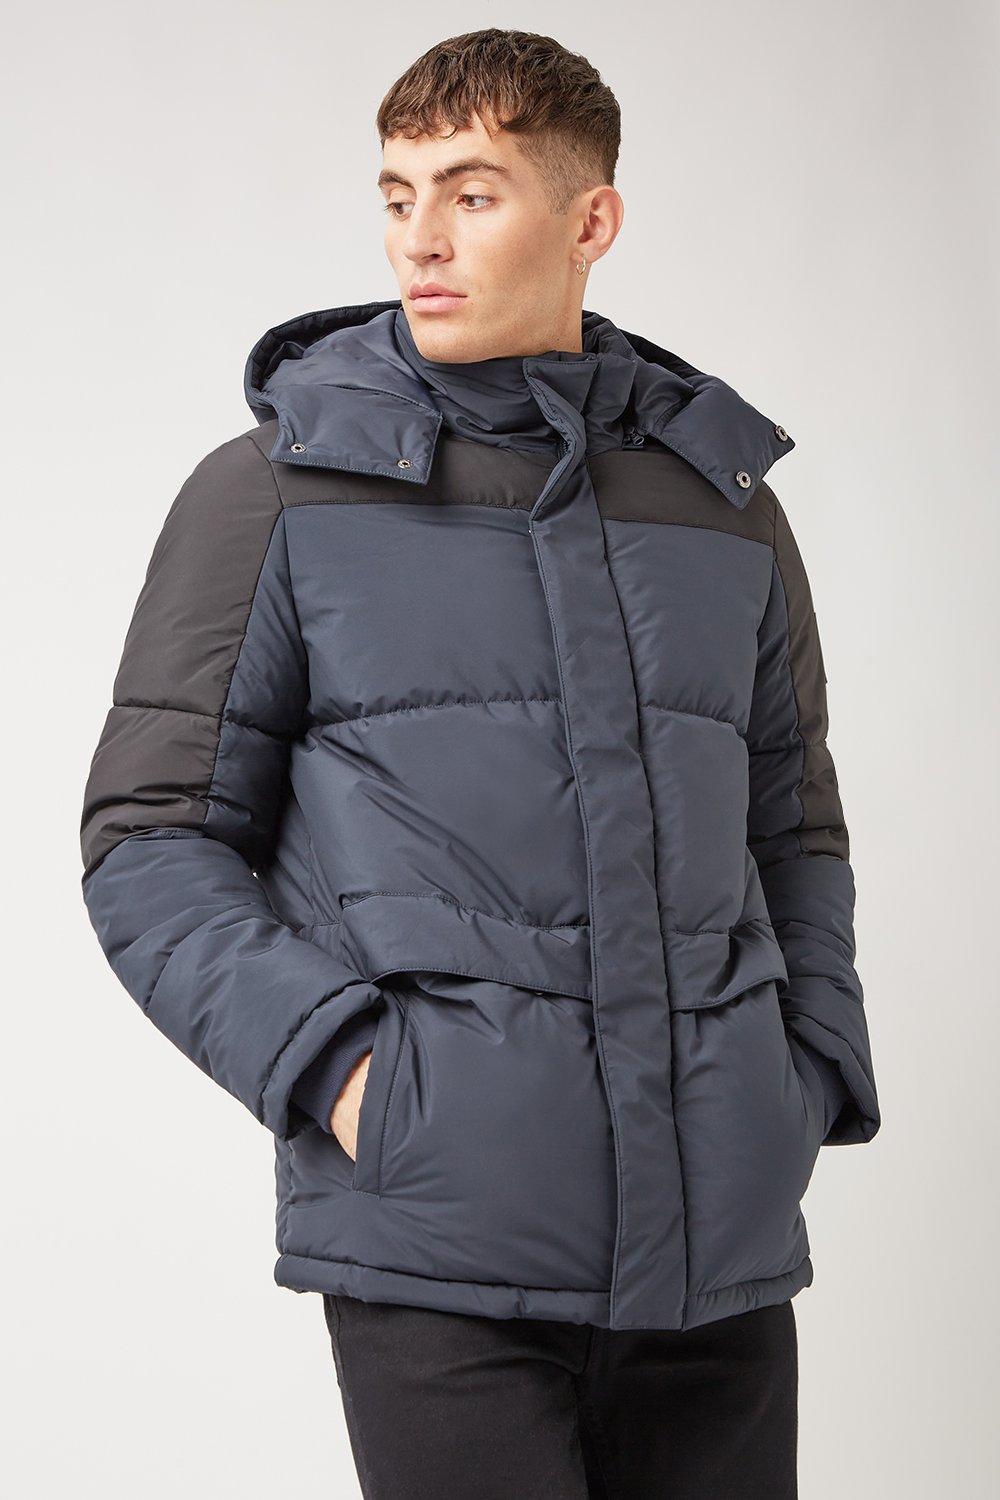 Jackets & Coats | Premium Panelled Puffer Parker Jacket | Burton